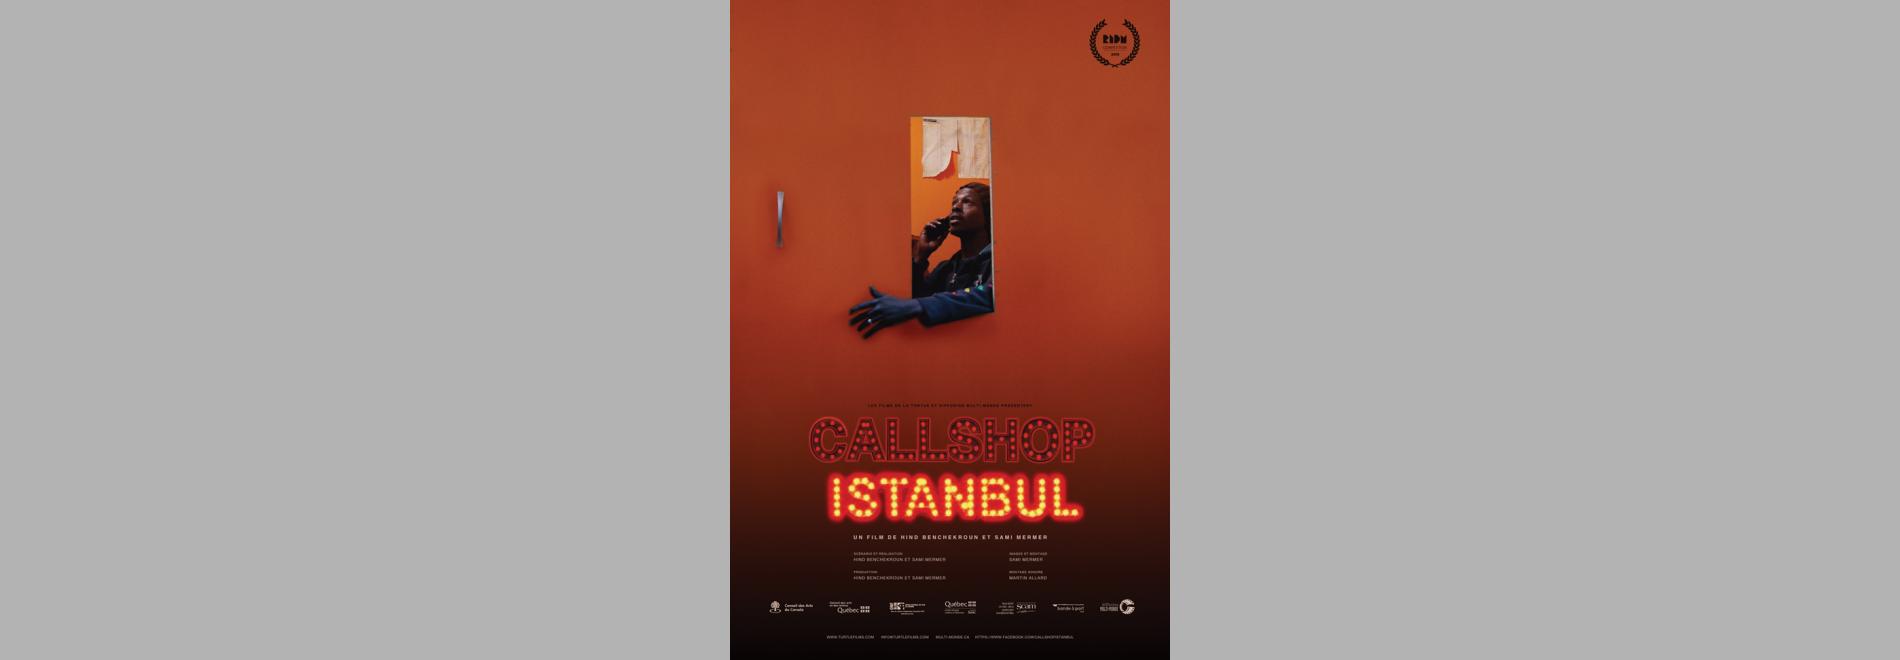 Callshop Istanbul / Locutori Istambul (Hind Benchekroun, Sami Mermer, 2015)